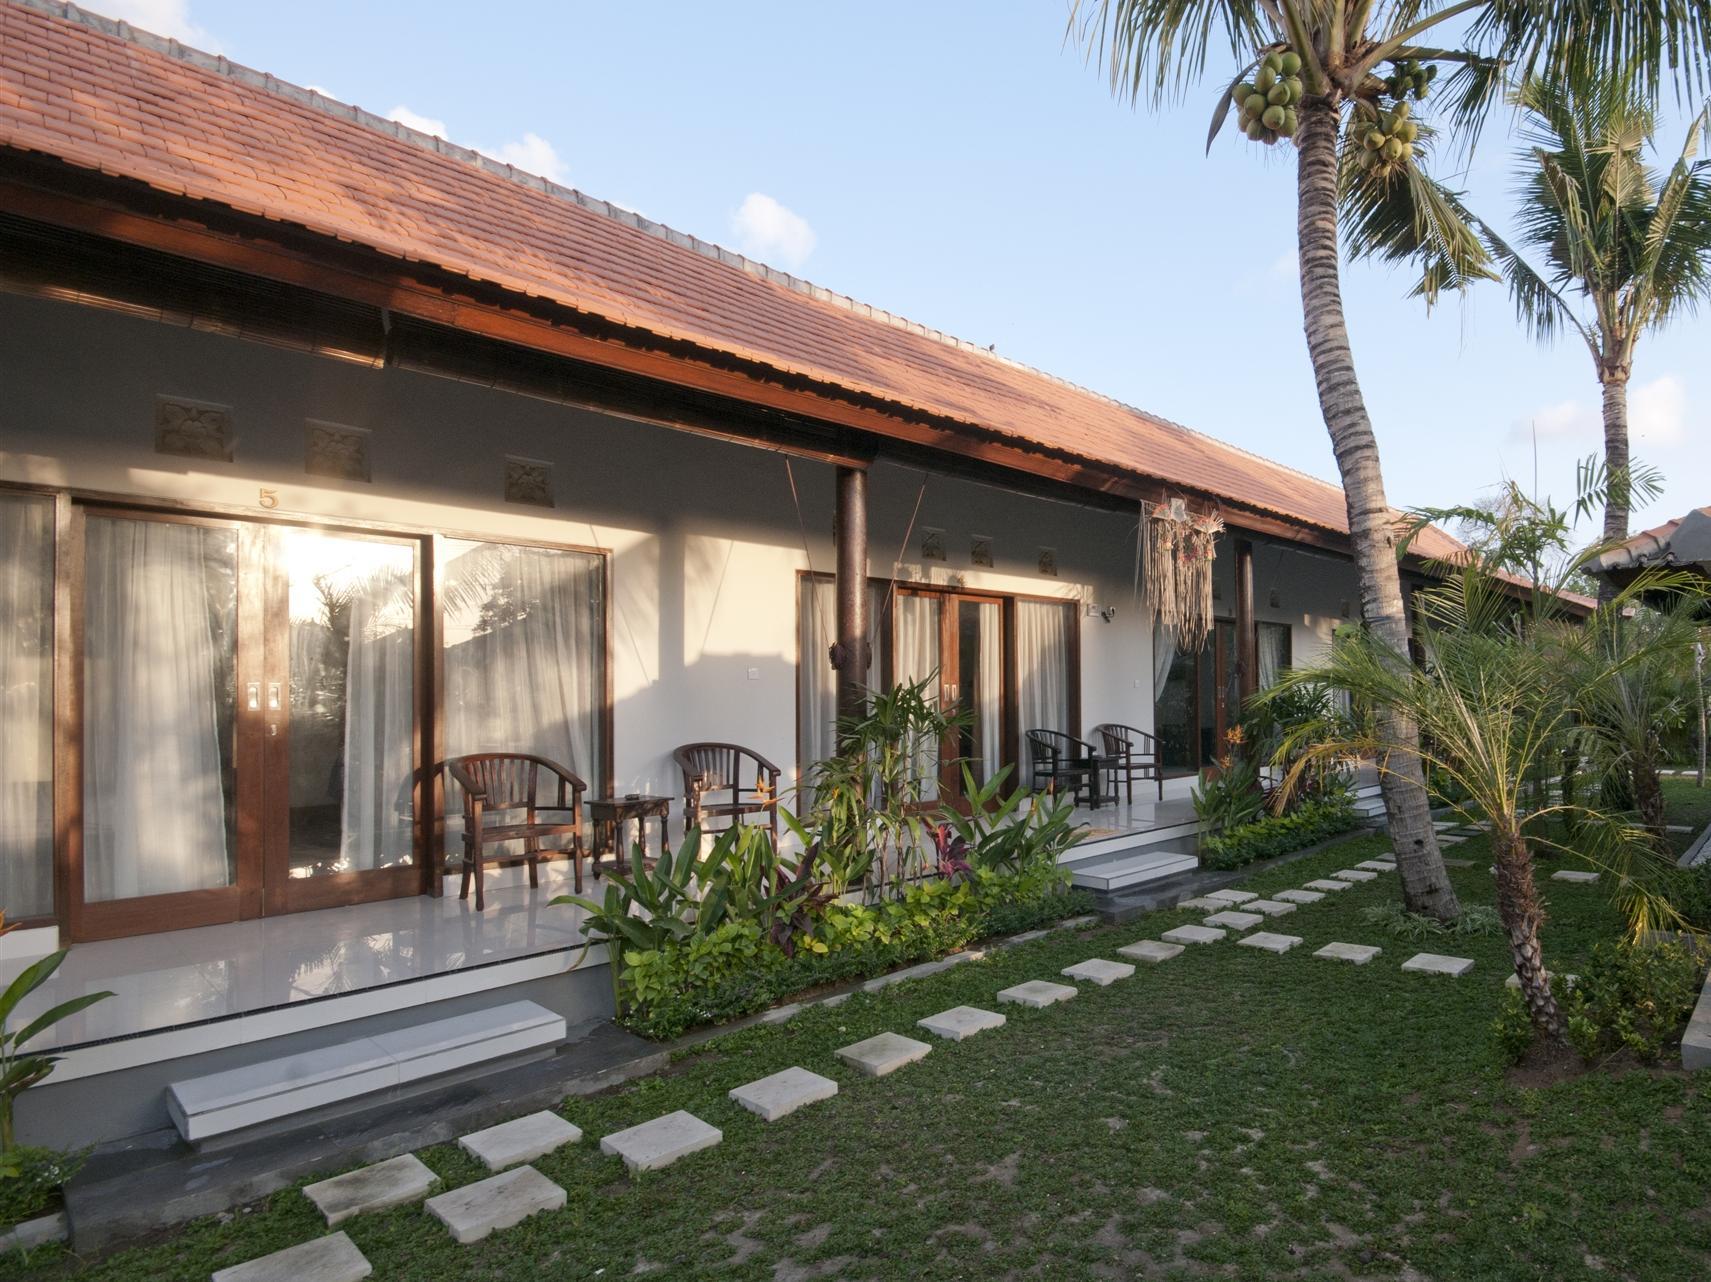 Matra Bali Guest House